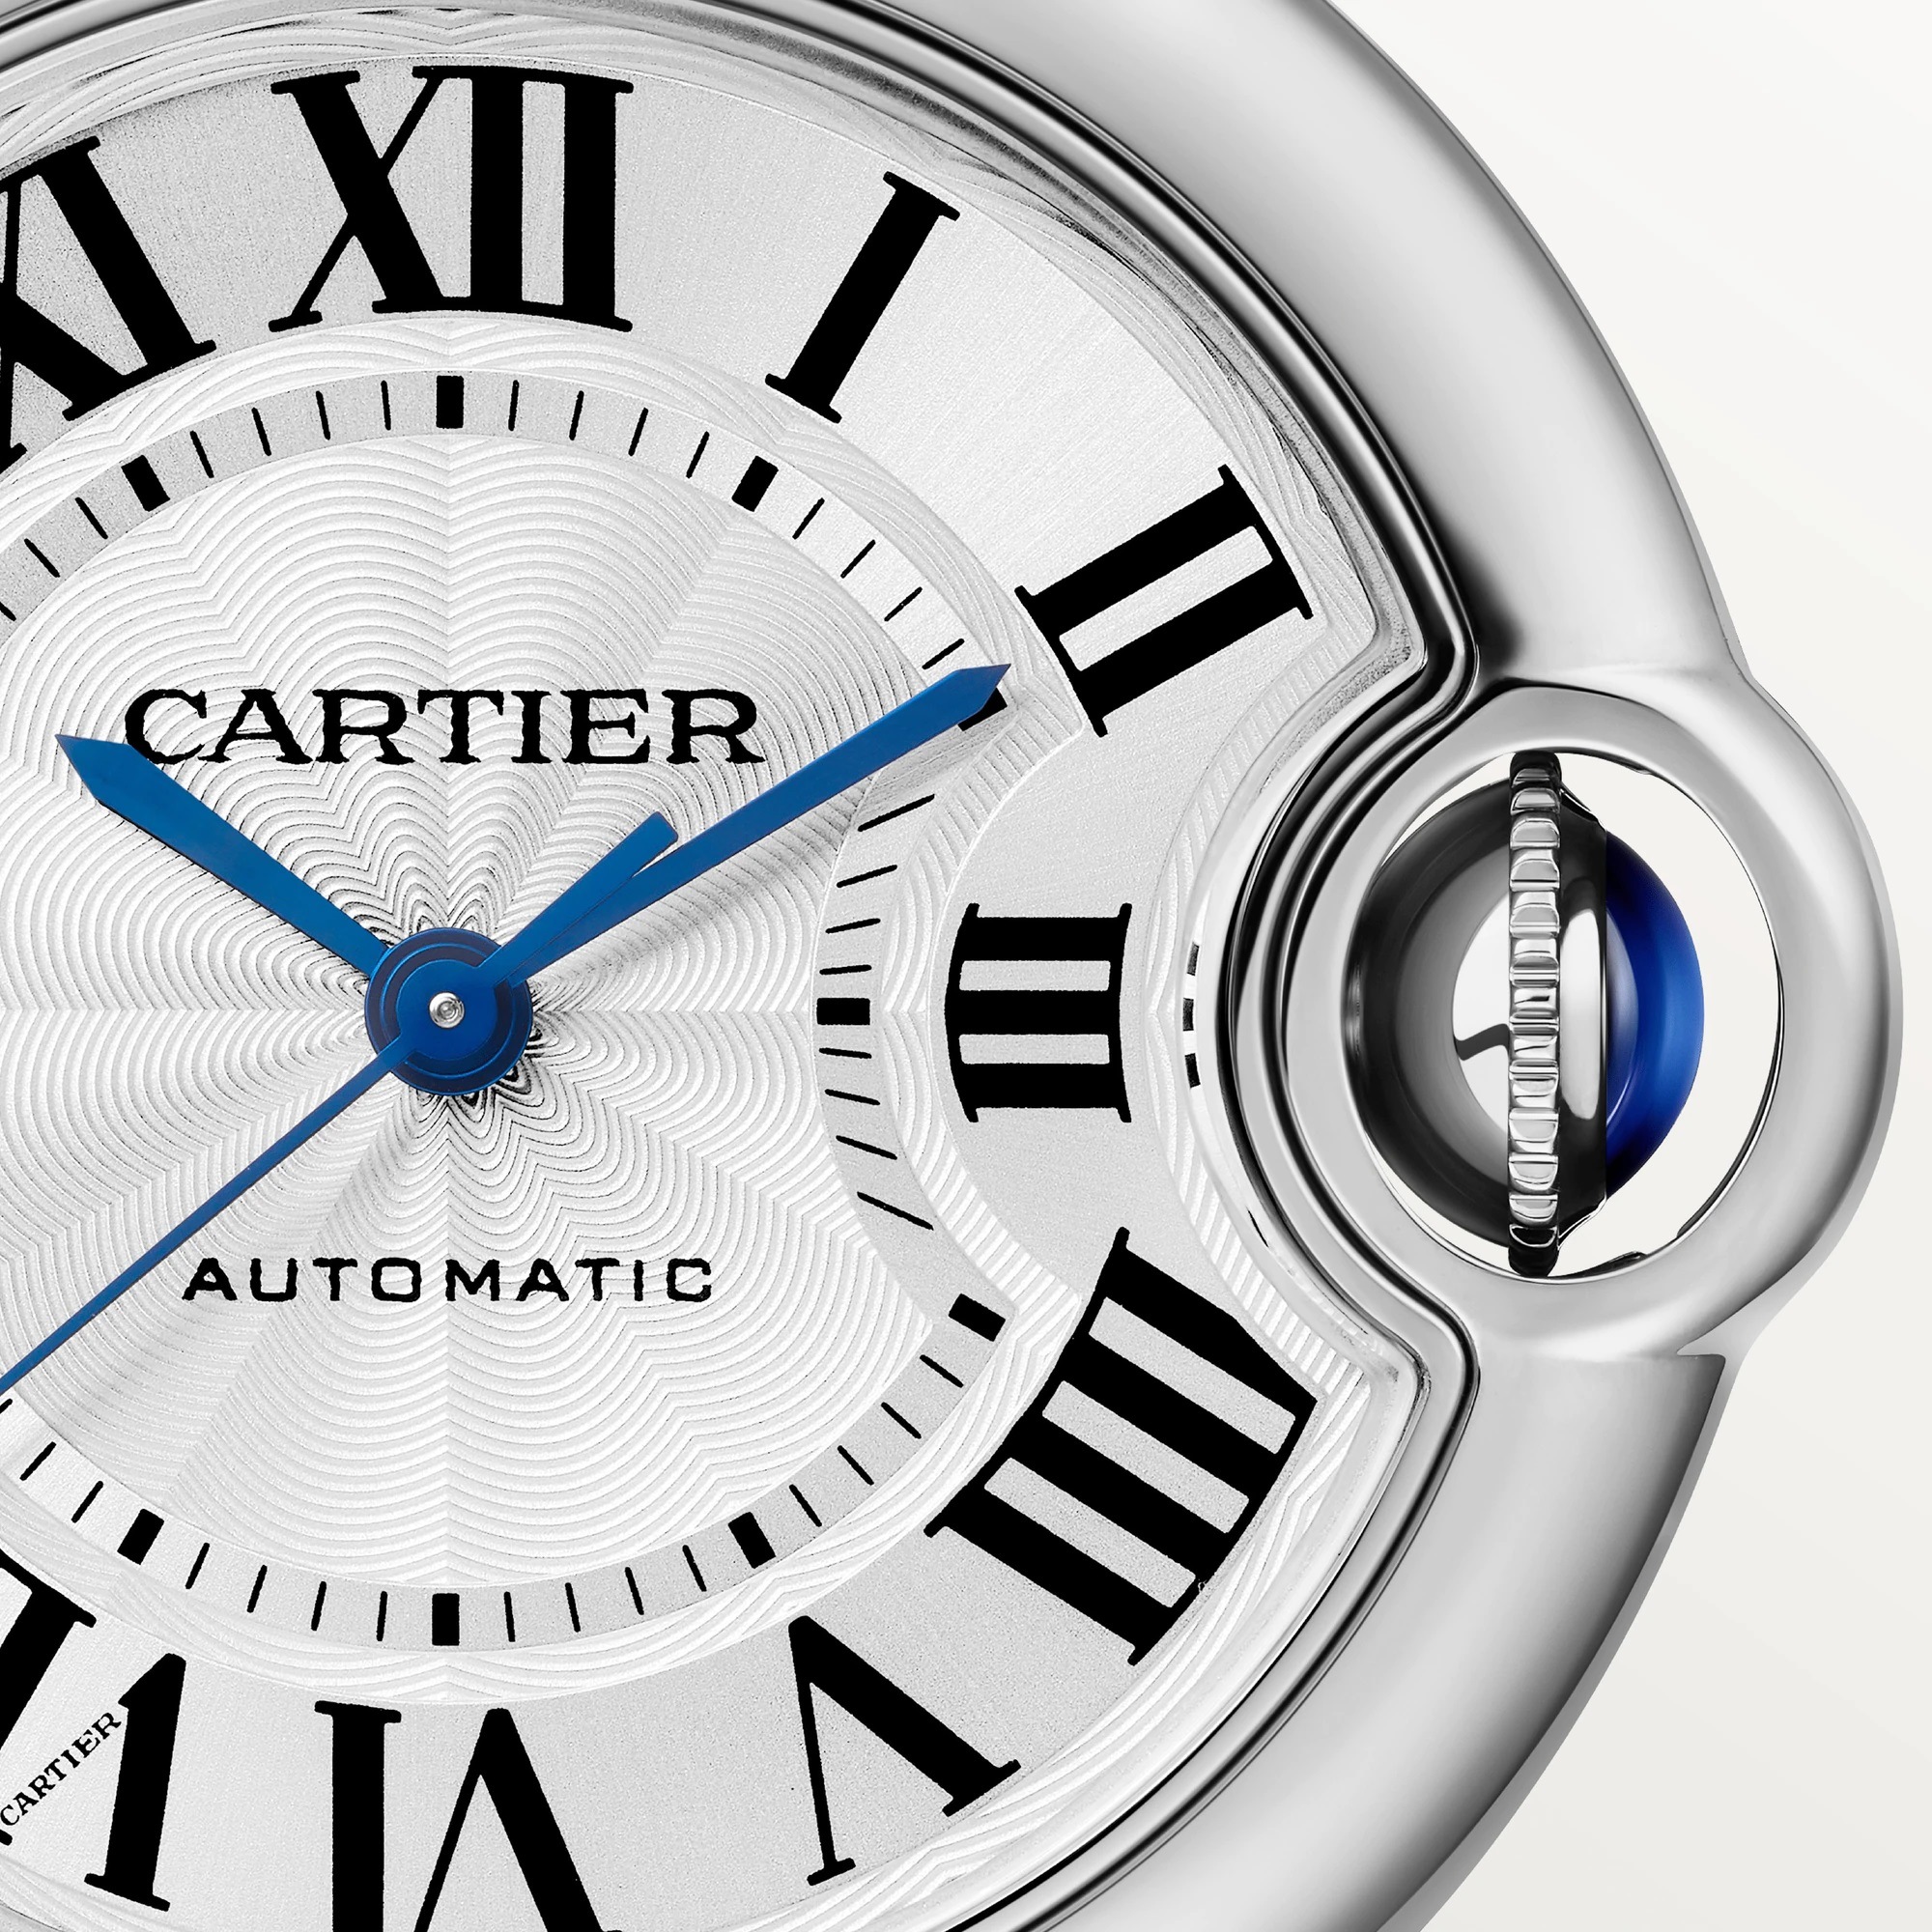 Ballon Bleu de Cartier Watch, Silver Guilloche Dial, 33mm
